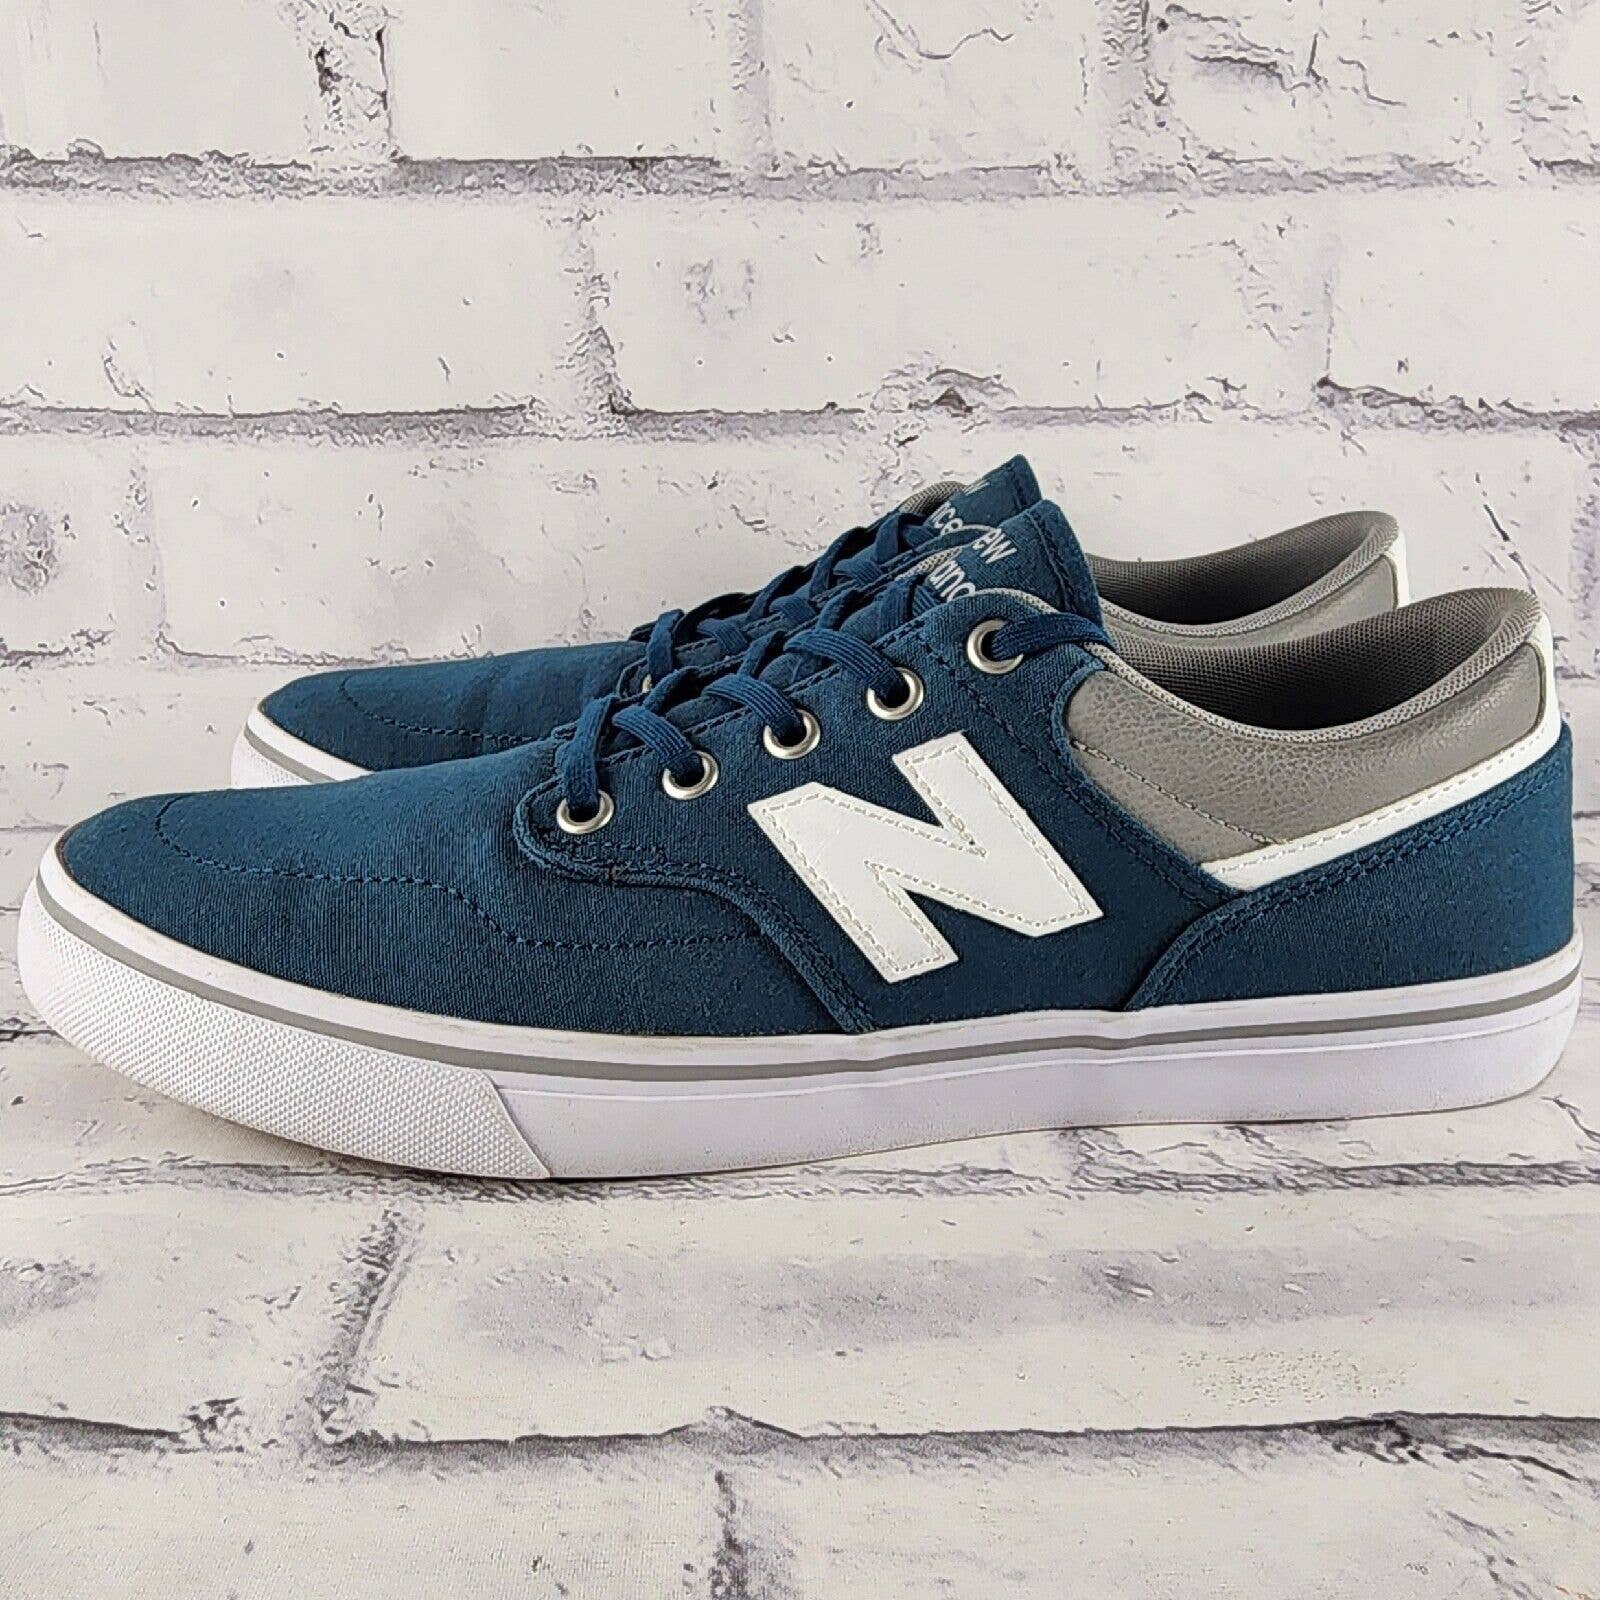 New Balance Fresh Foam 331 Sneakers Men's Size 9.5 D Blue Canvas Casual Shoes